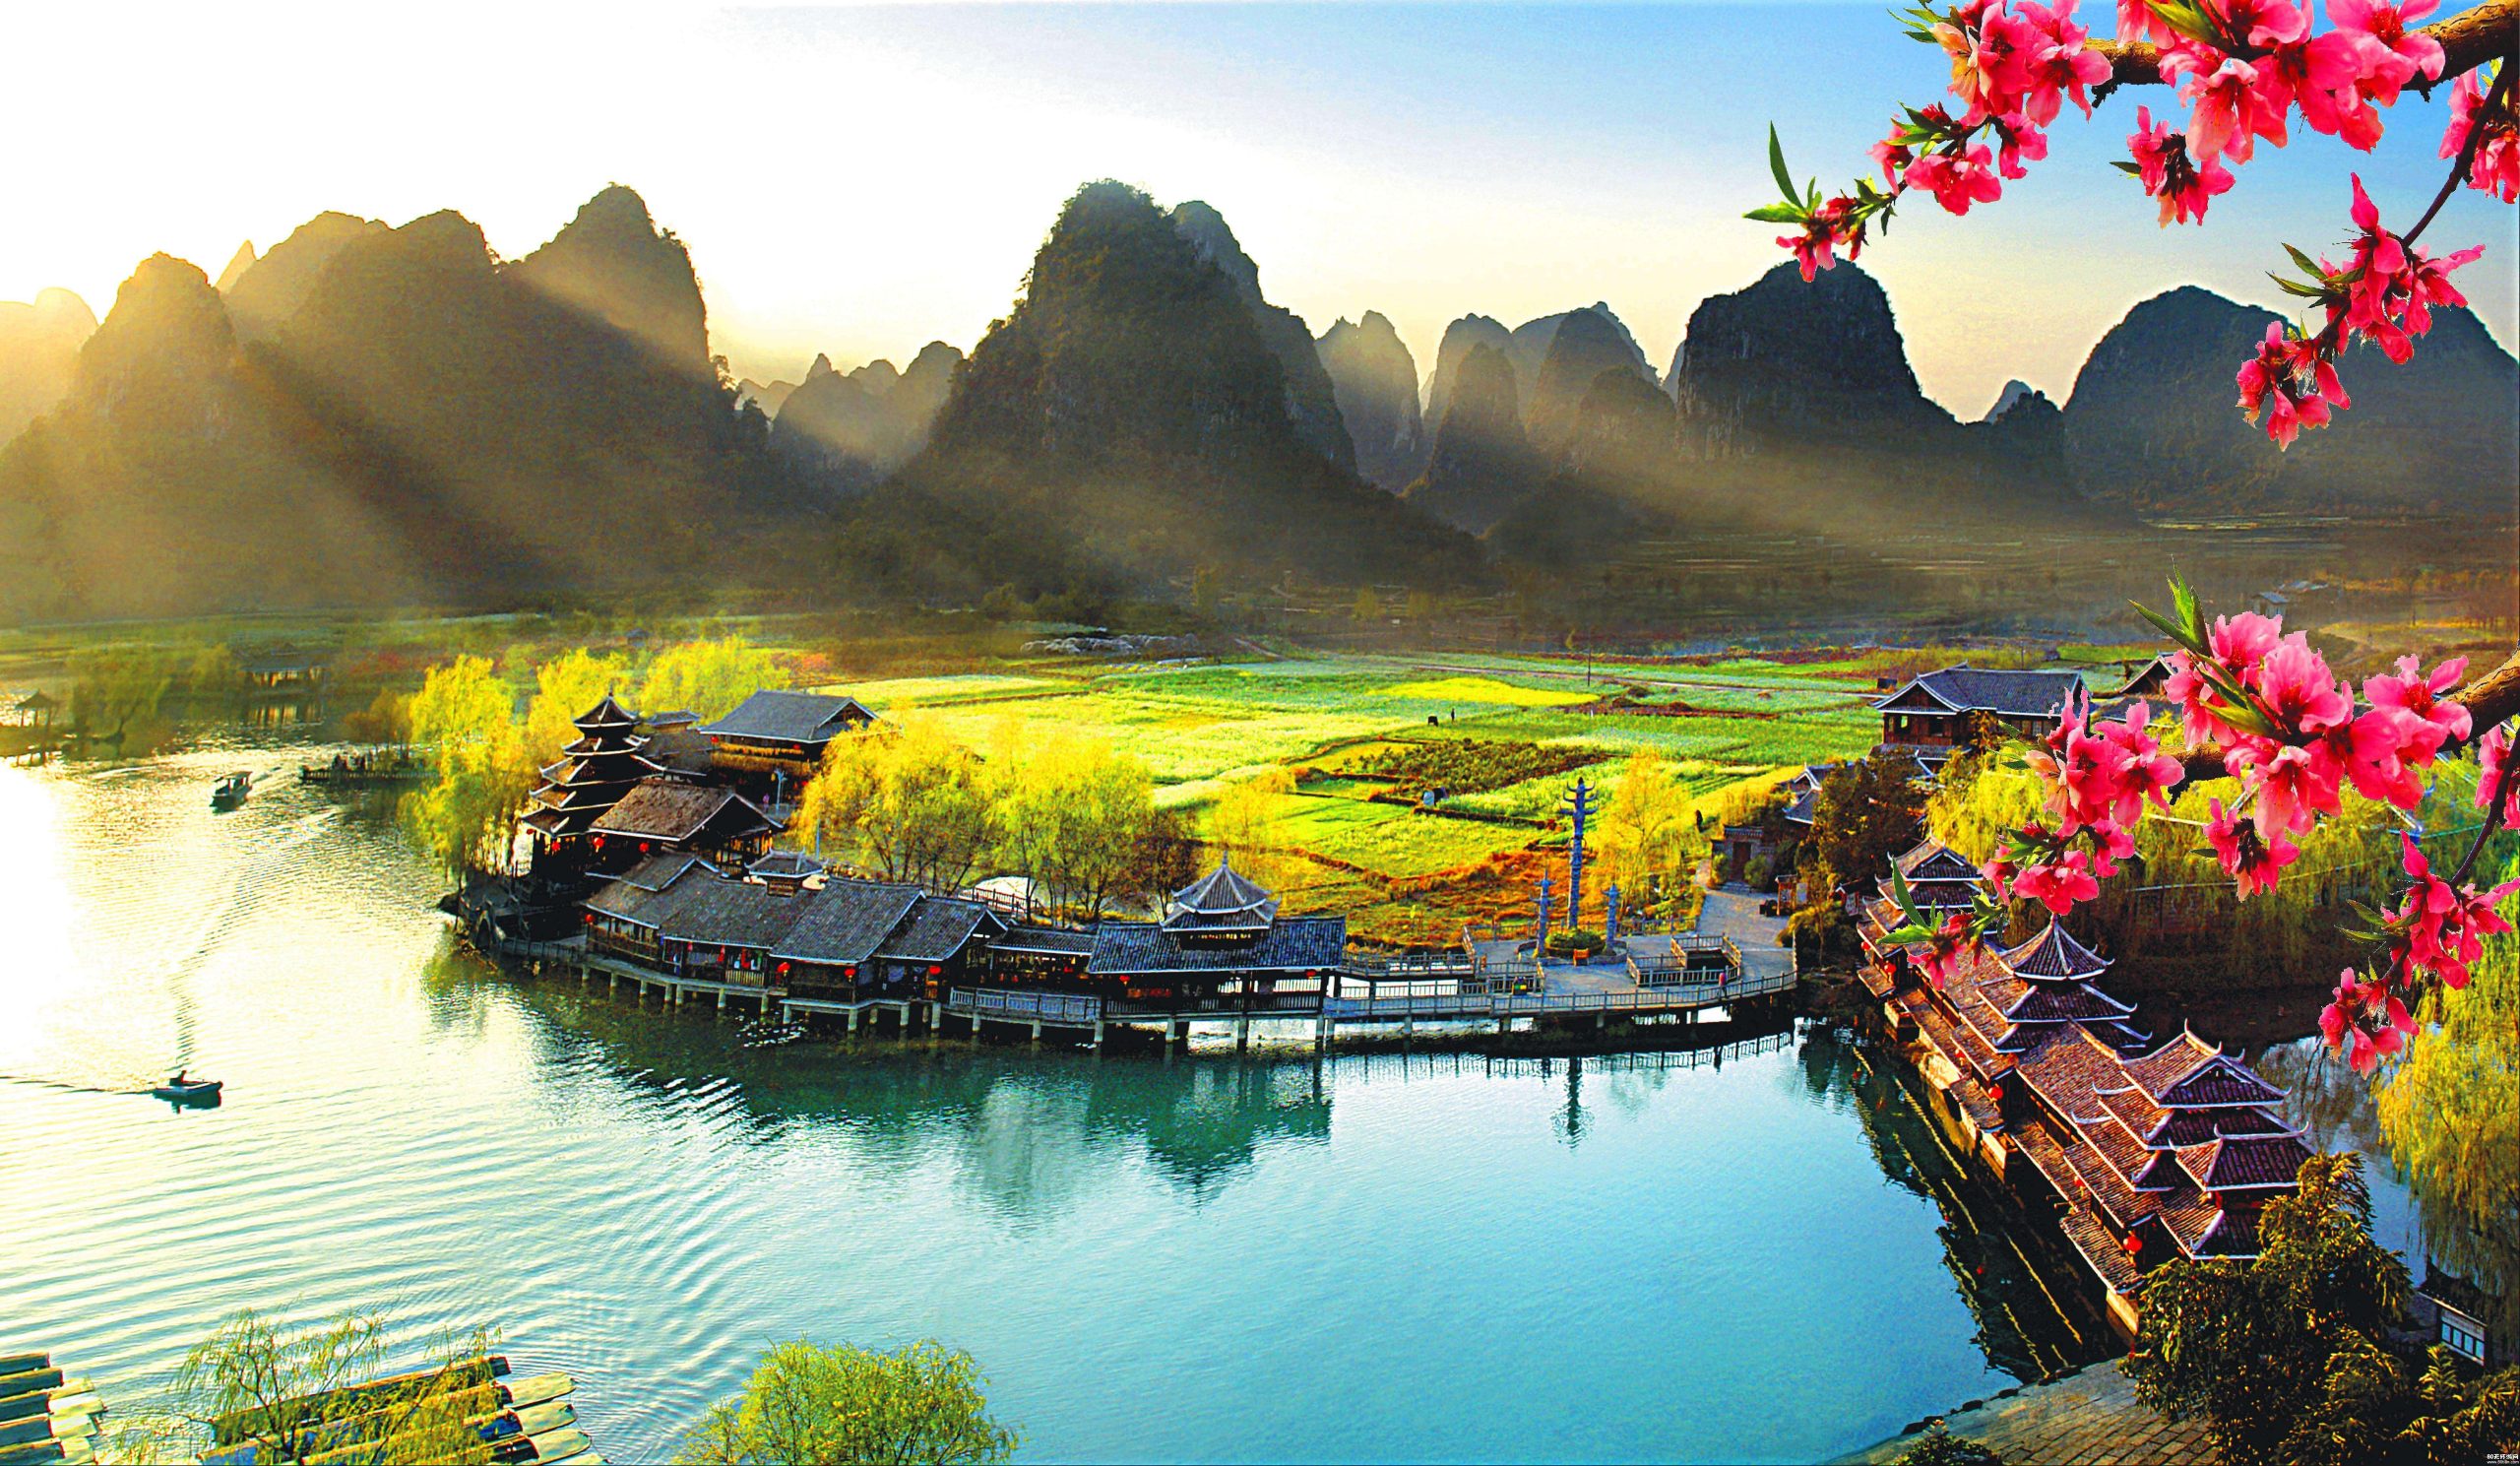 Li River: Discover Nature’s Majestic Beauty